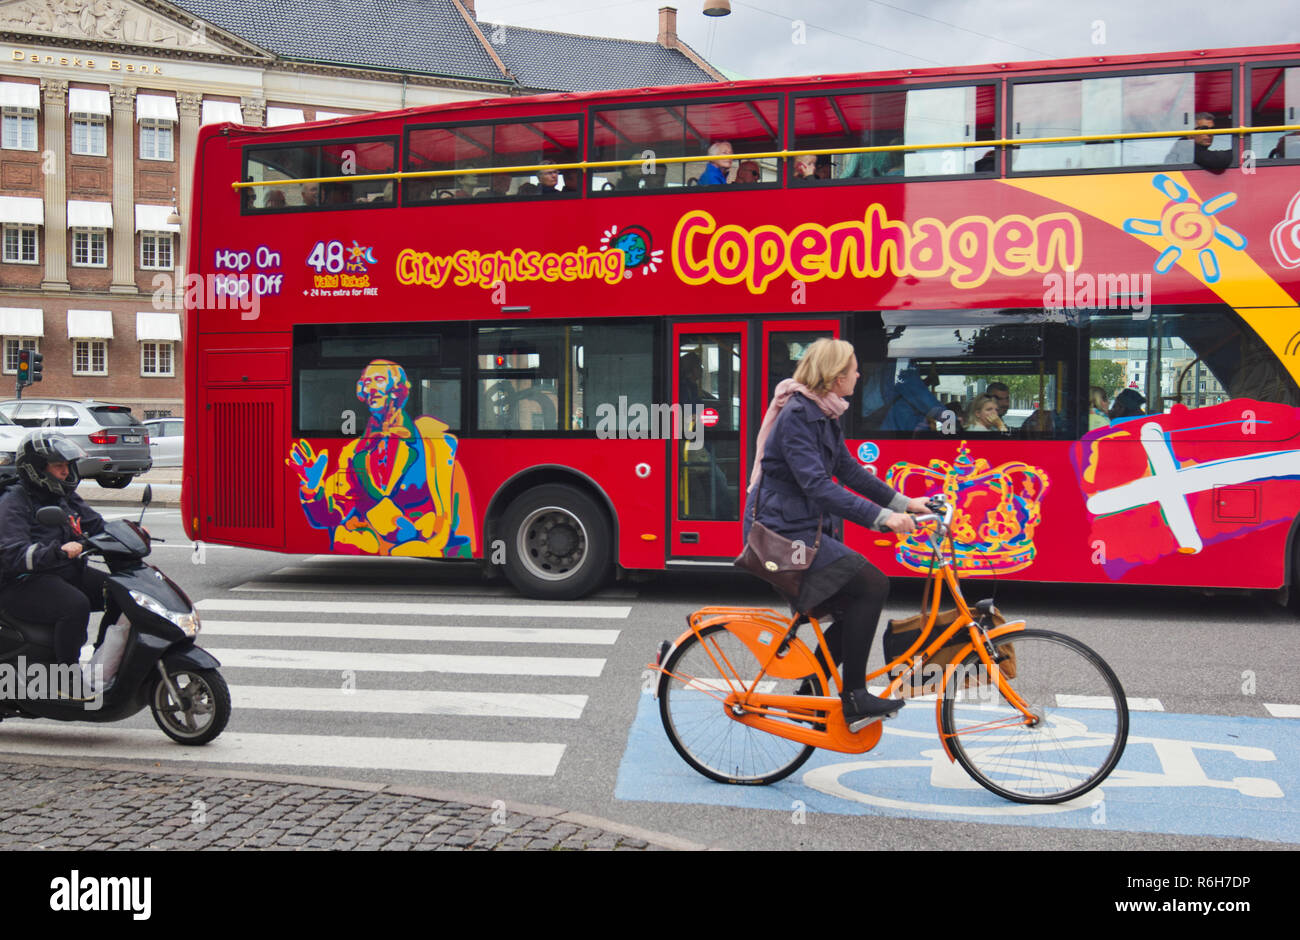 Hop on hop off city sightseeing double decker bus, Copenhagen, Denmark, Scandinavia Stock Photo